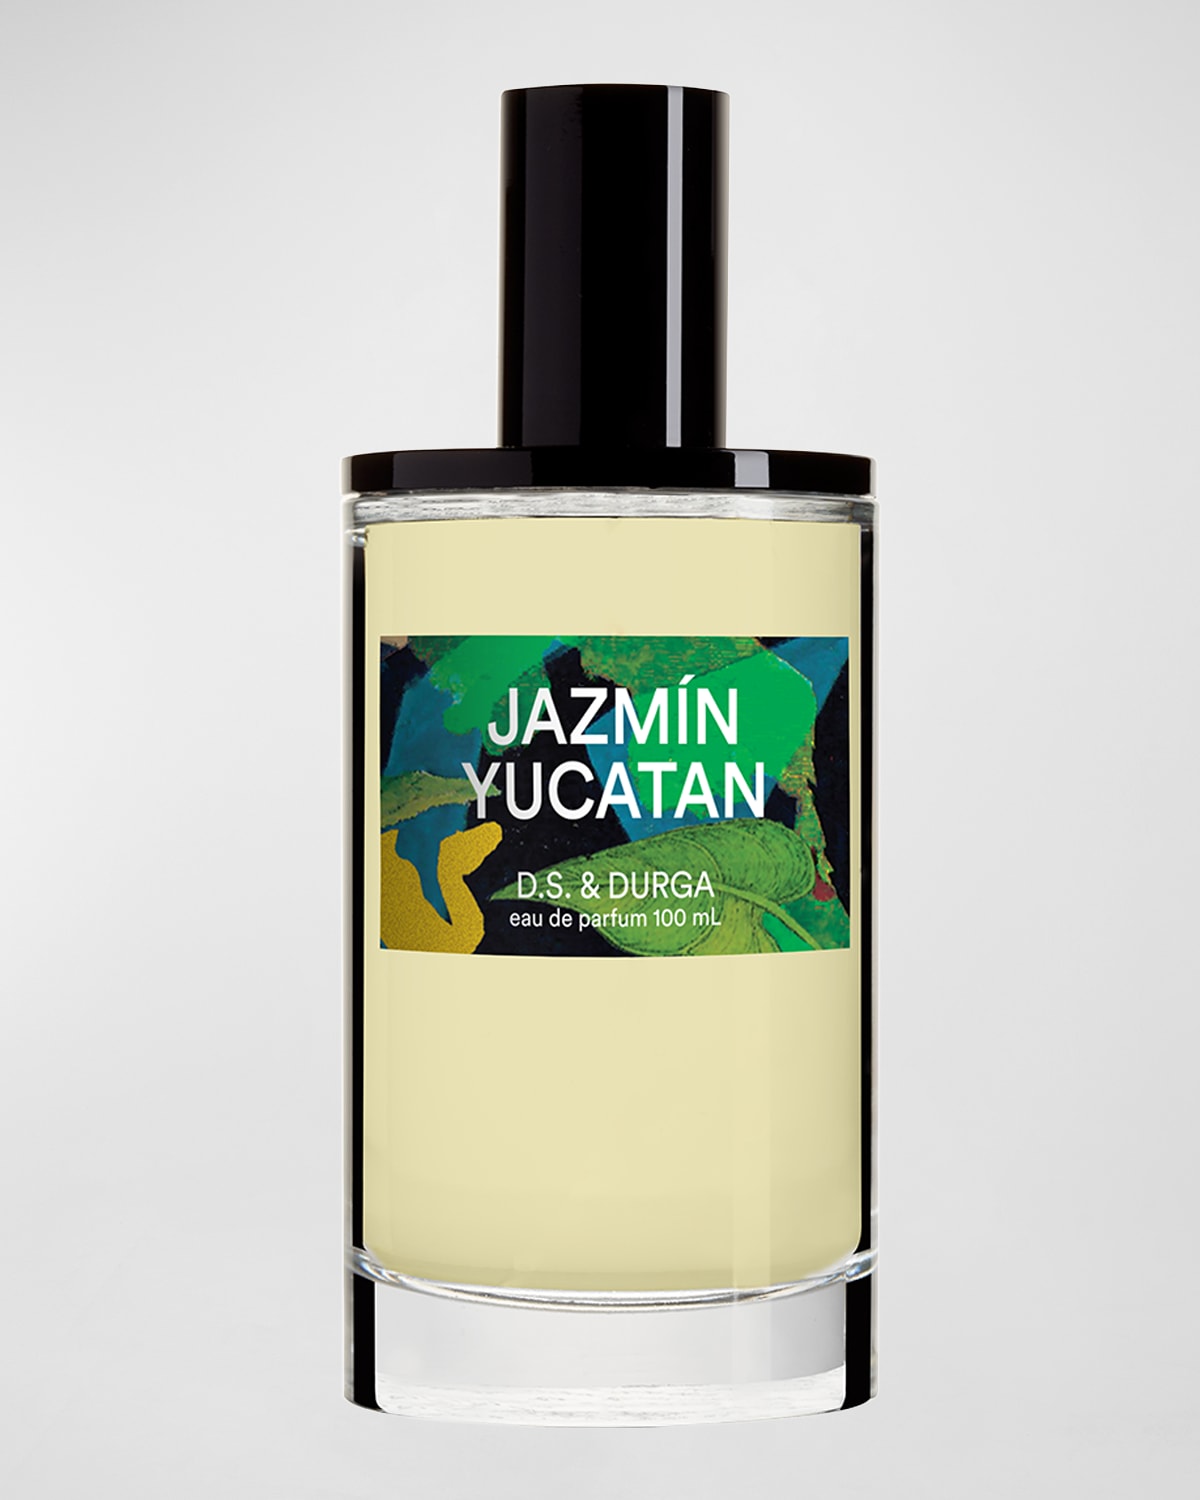 Jazmin Yucatan Eau de Parfum, 3.4 oz.